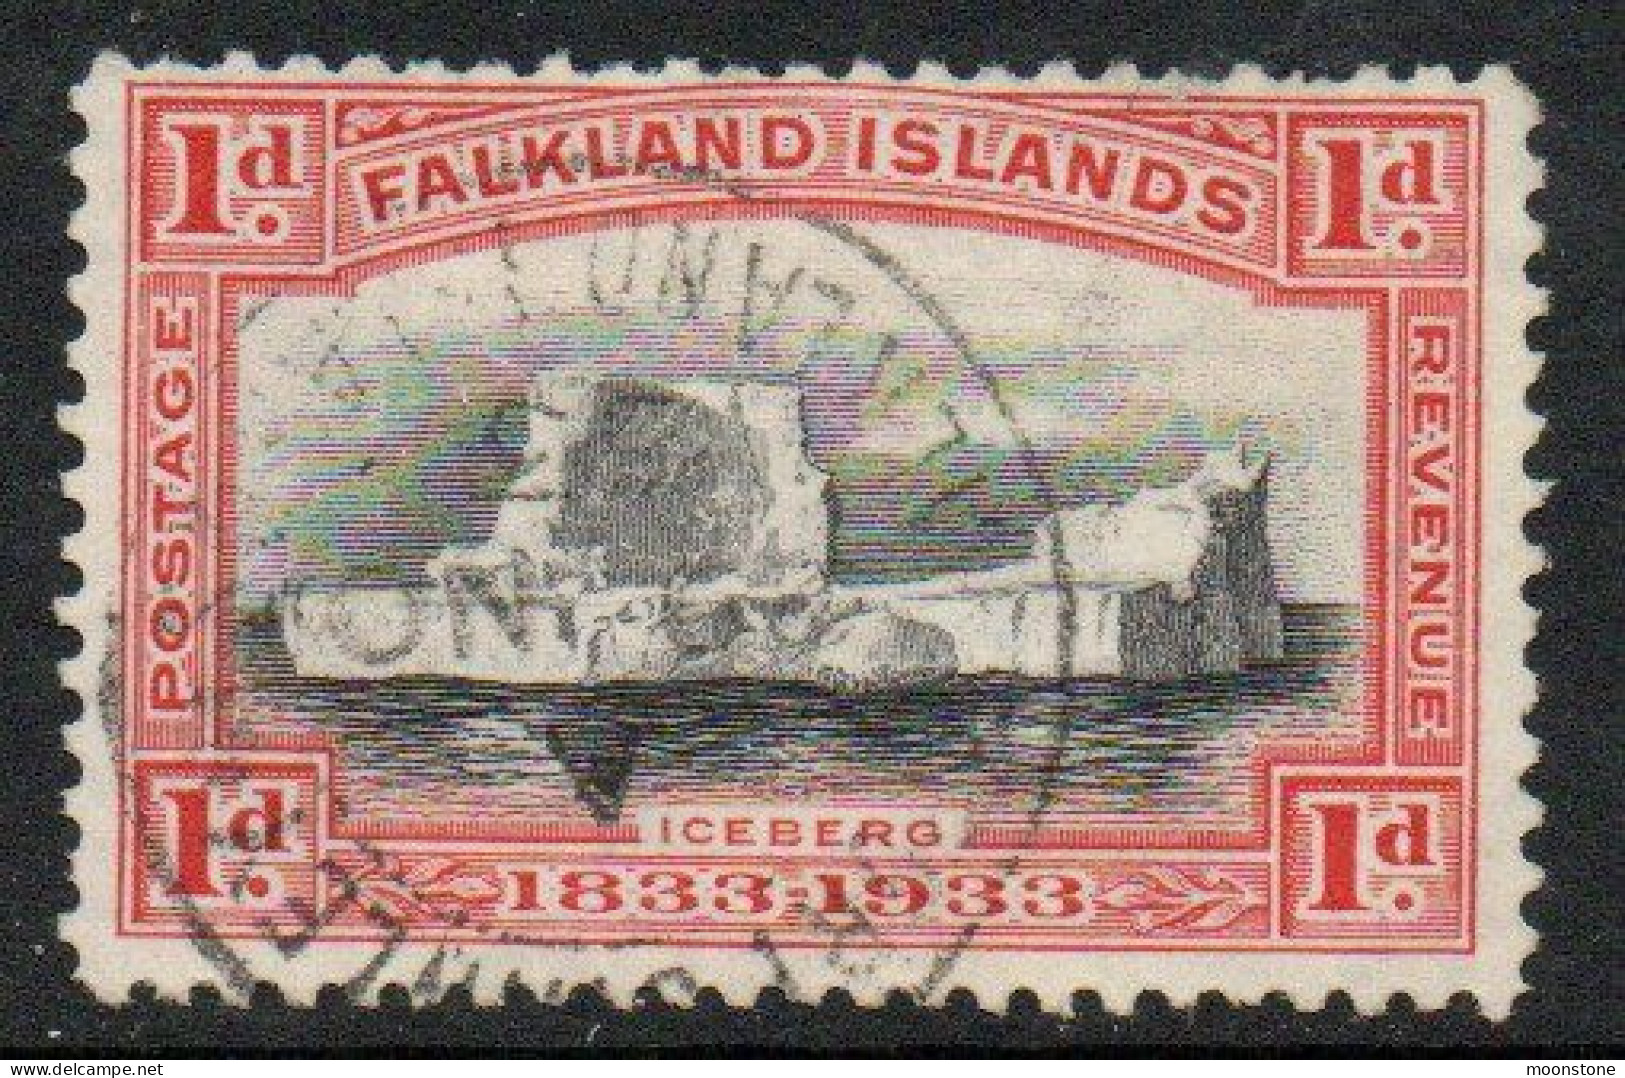 Falkland Islands GV 1933 Centenary 1d Value, Wmk. Multiple Script CA, Used, SG 128 - Falkland